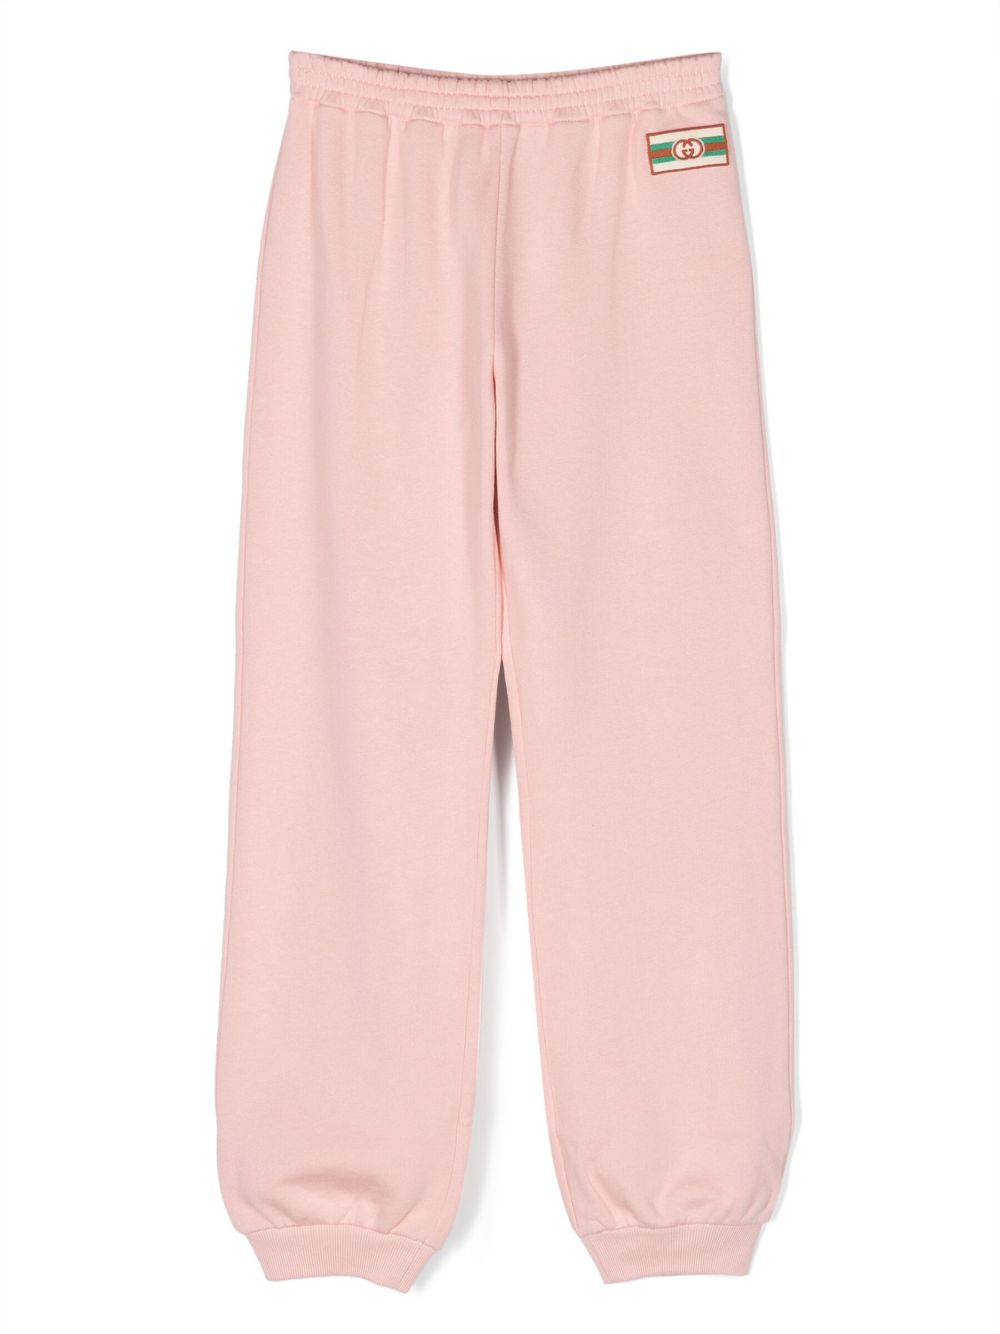 Pantalone sportivo rosa per bambina